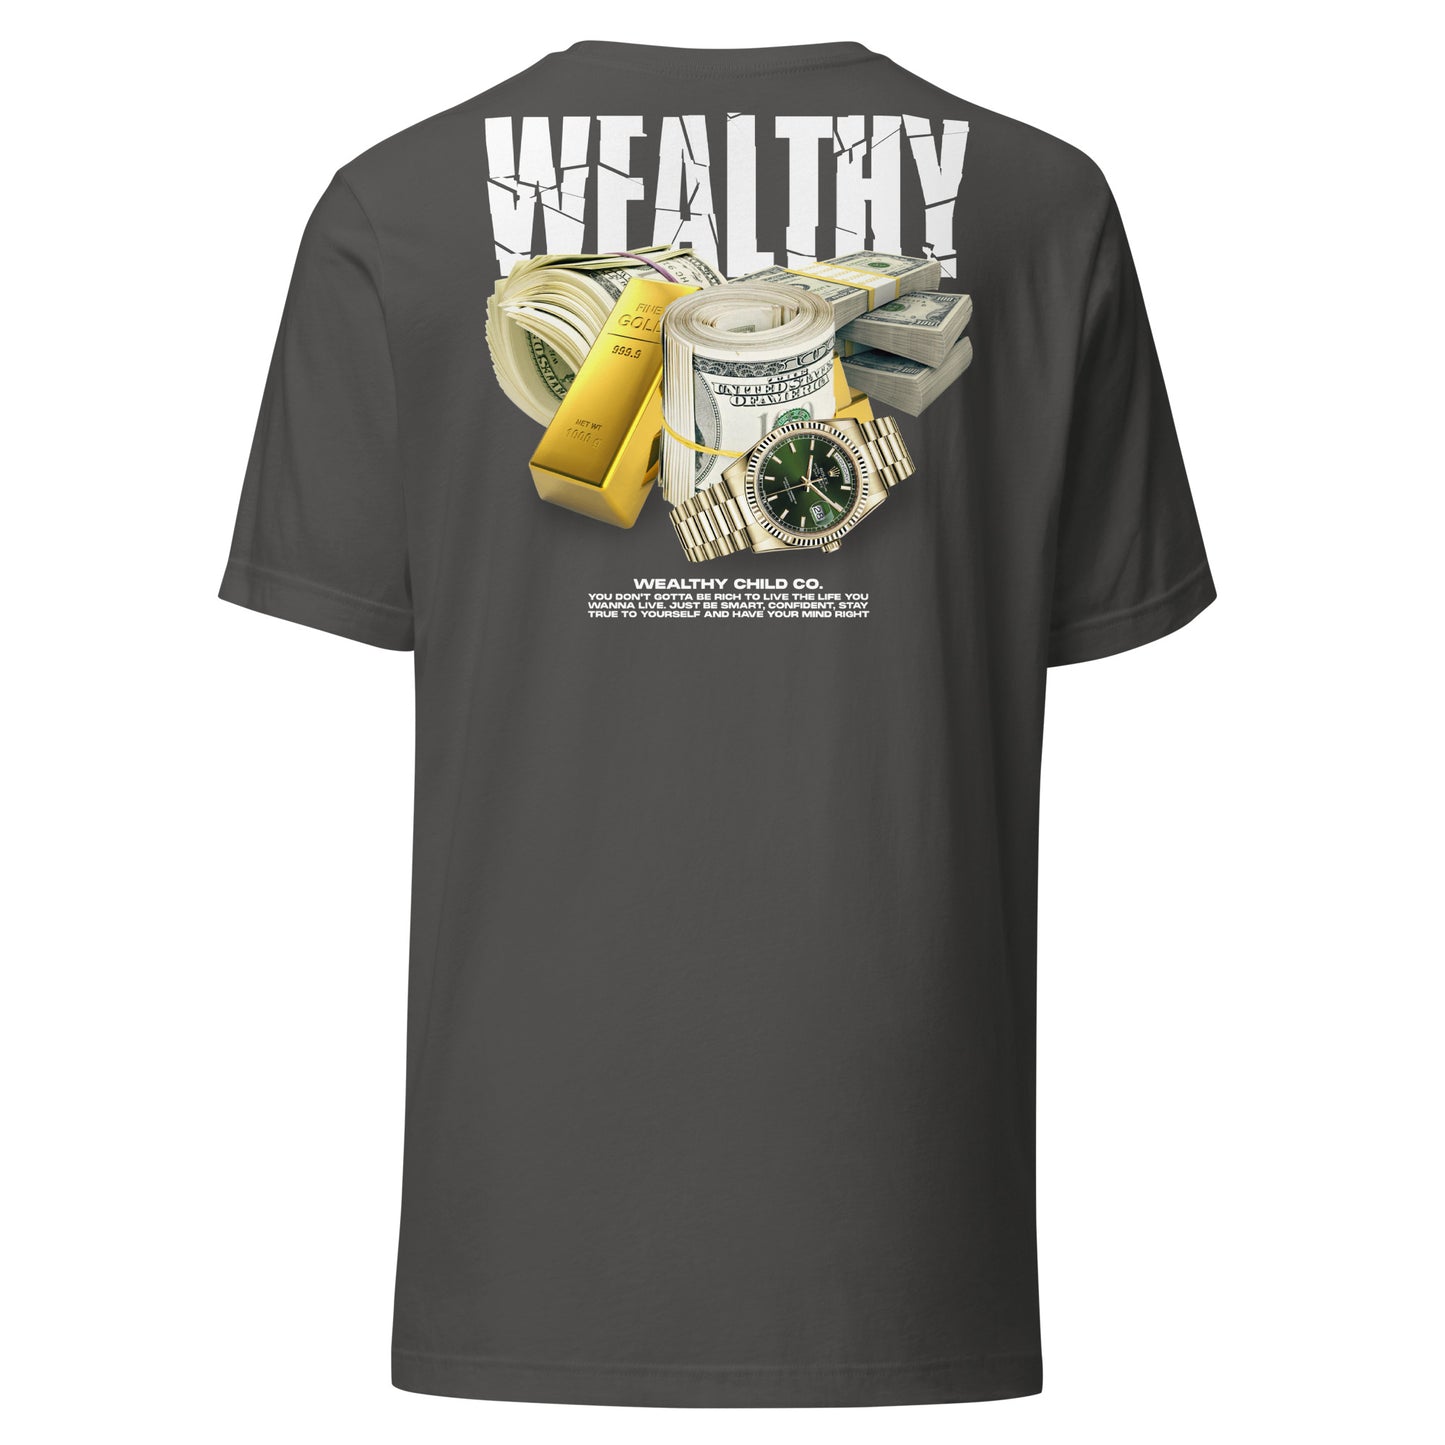 Wealthy Middle Unisex t-shirt (Color)